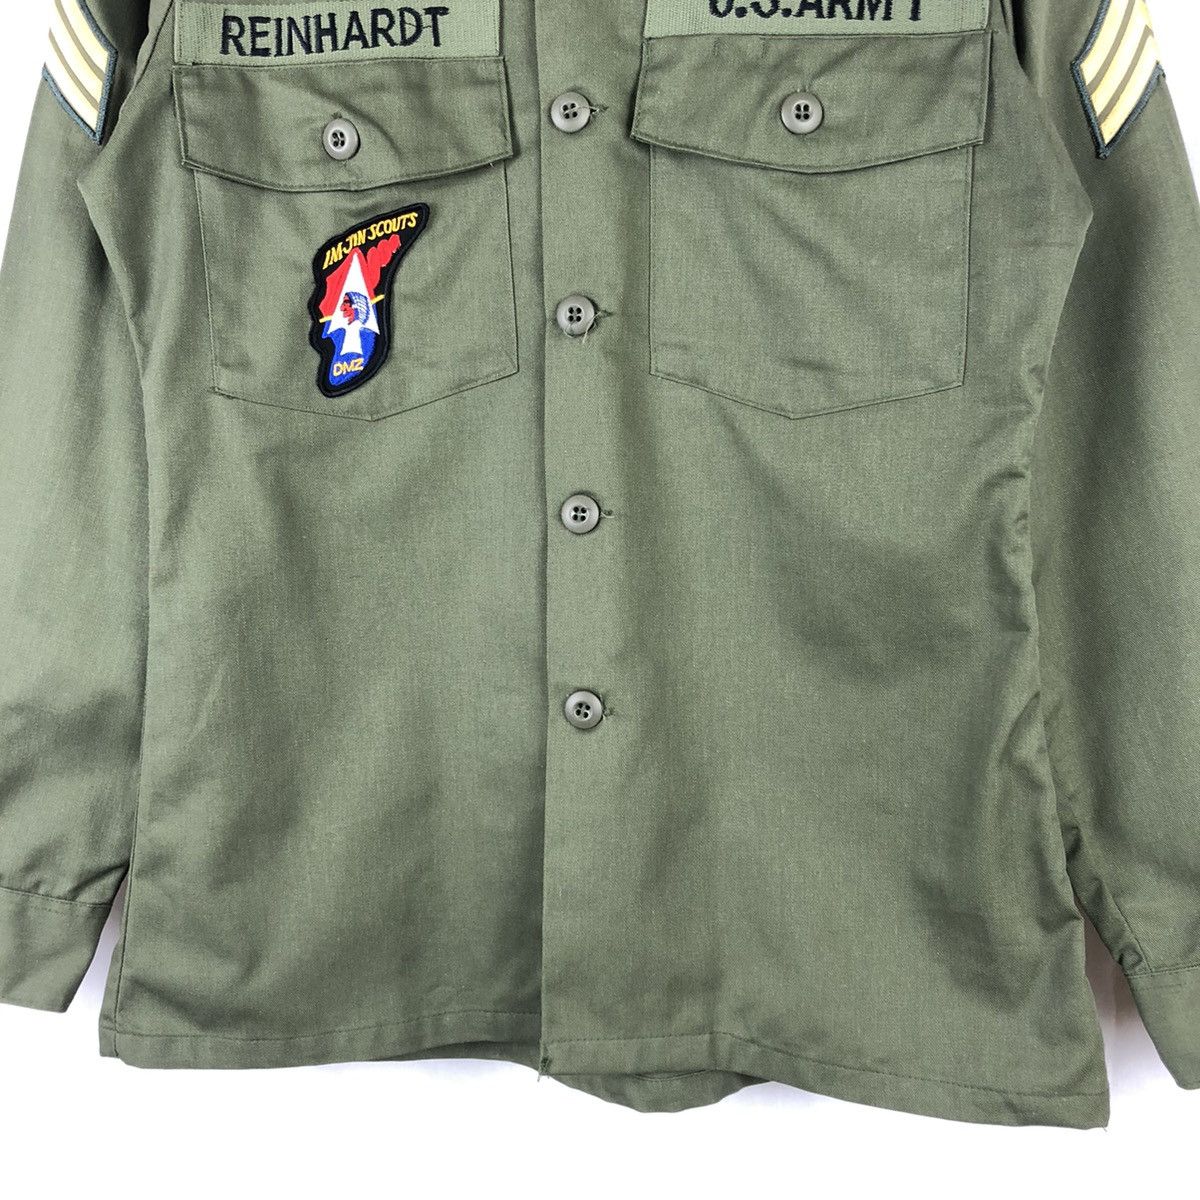 Vintage Vintage John Lennon Replica Army Jacket Size US M / EU 48-50 / 2 - 6 Thumbnail